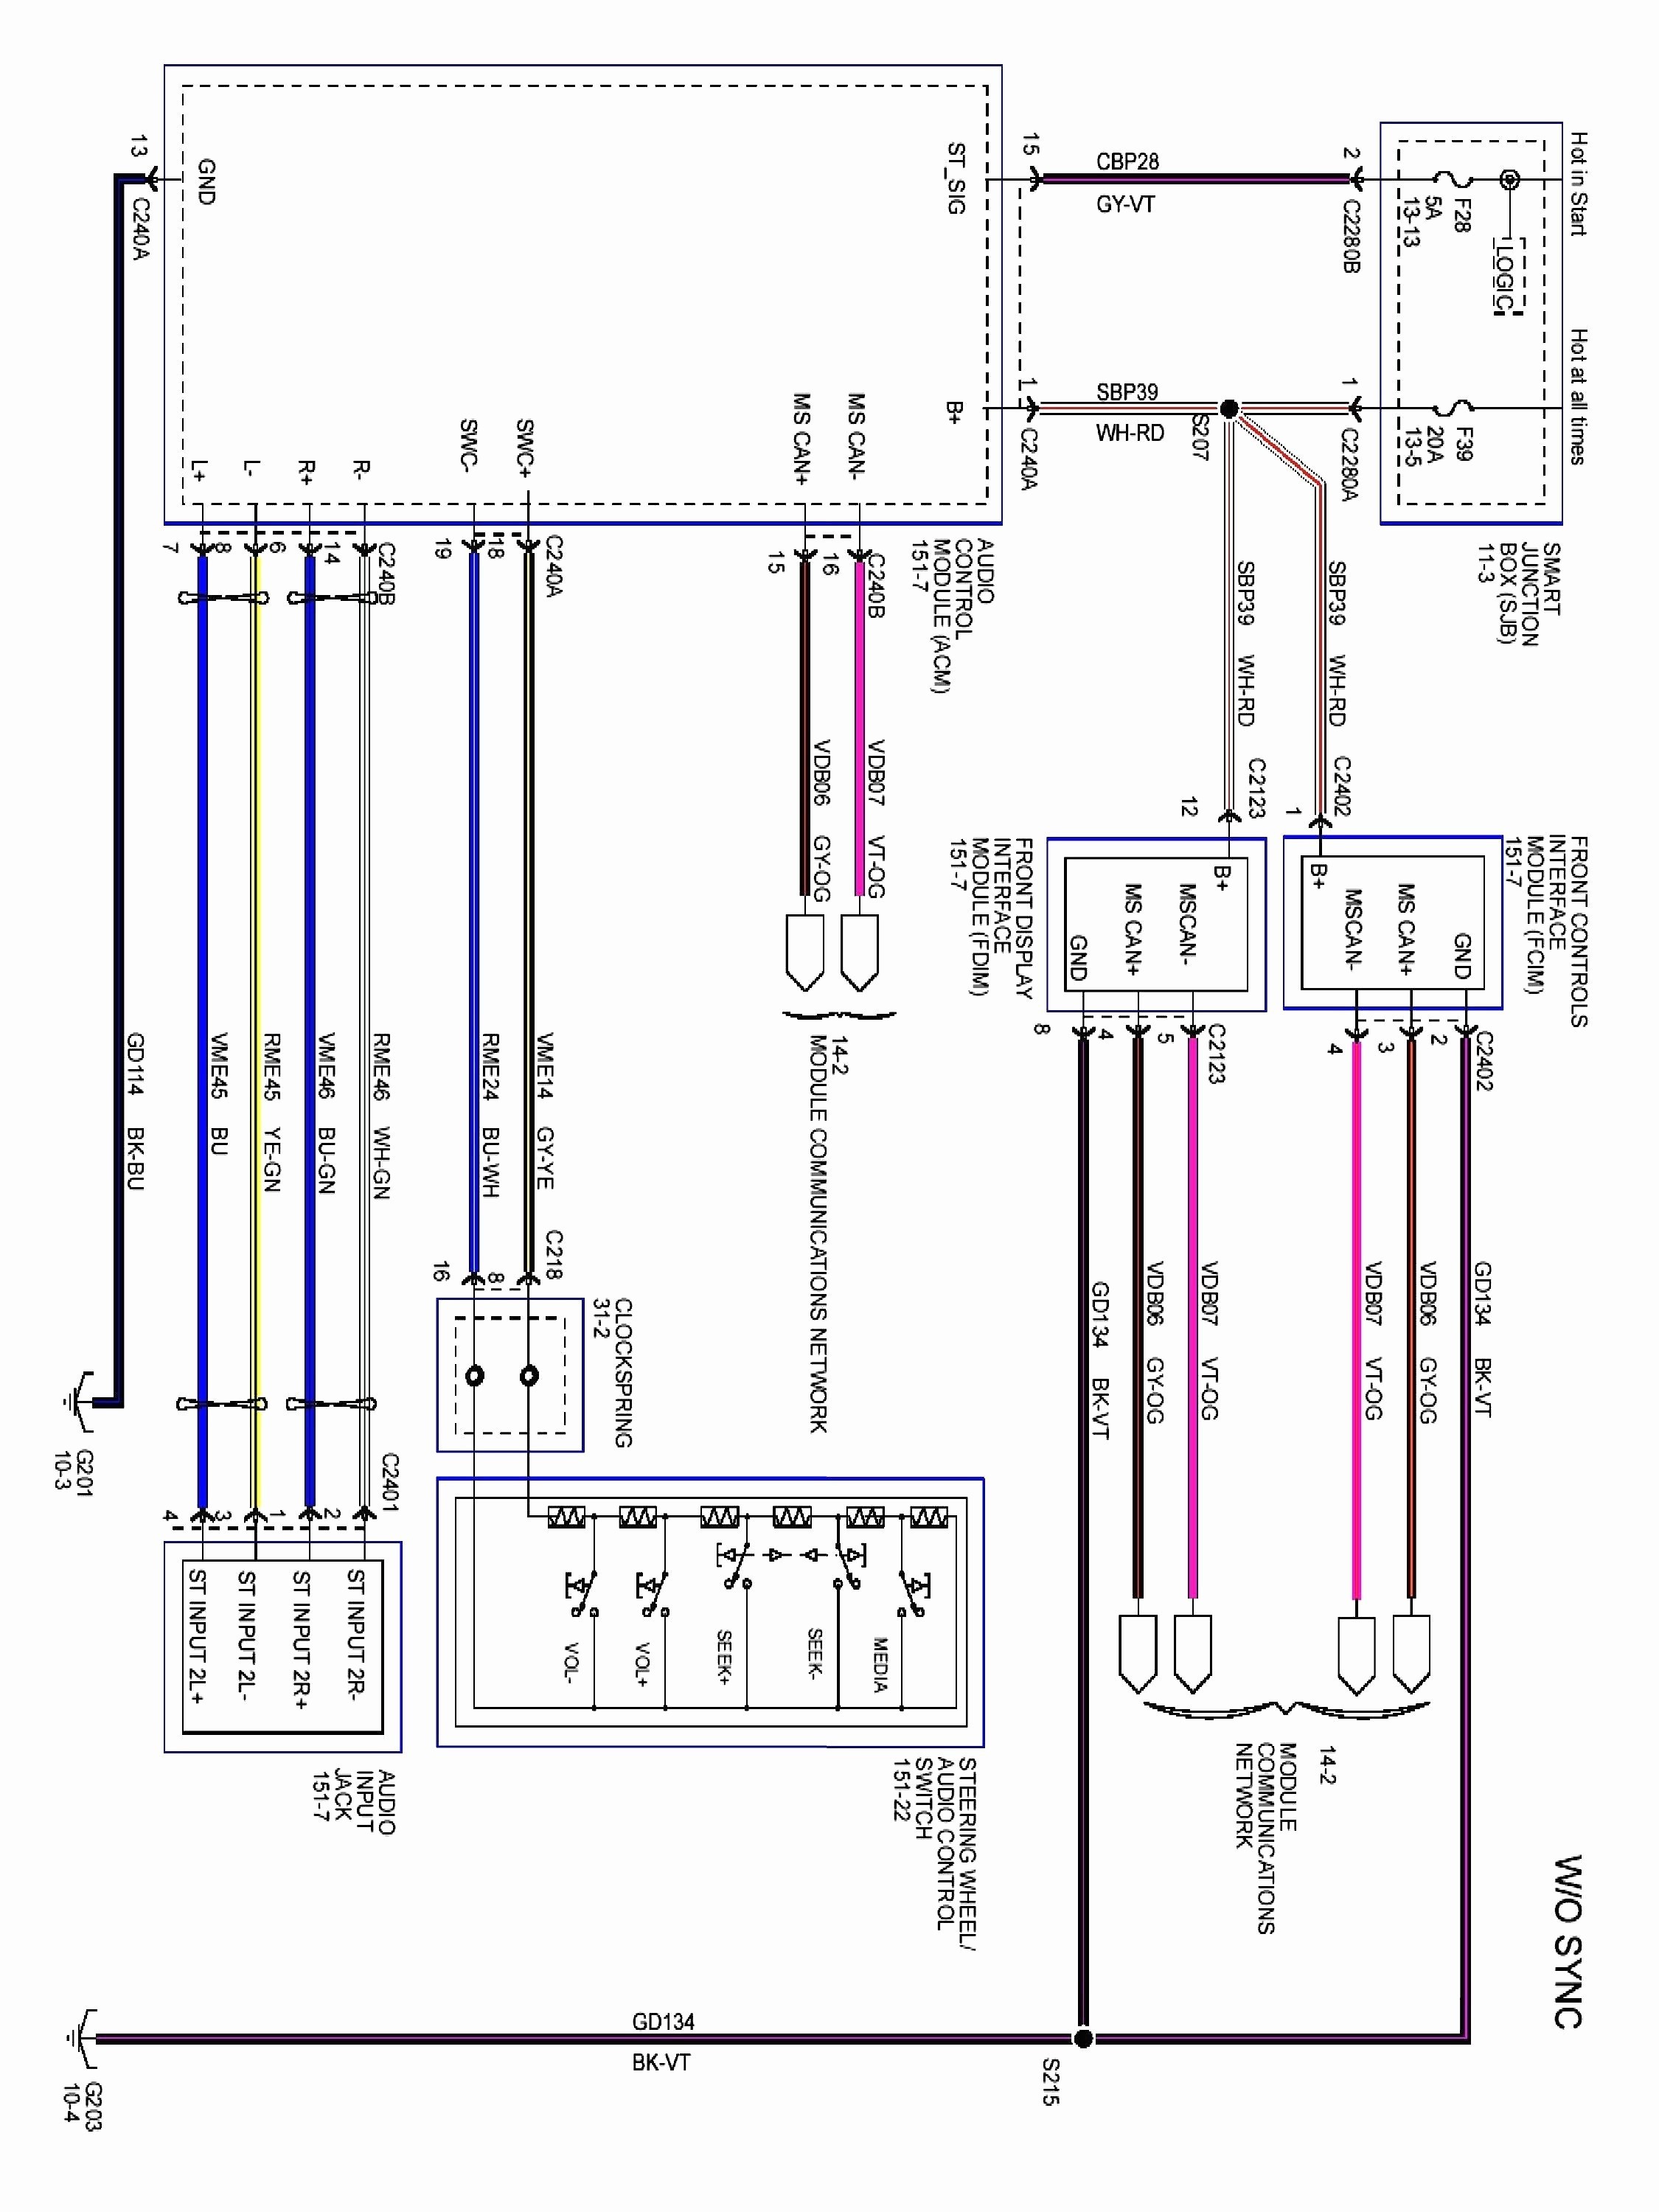 Car sound Wiring Diagram Car Amp Wiring Diagram Of Car sound Wiring Diagram